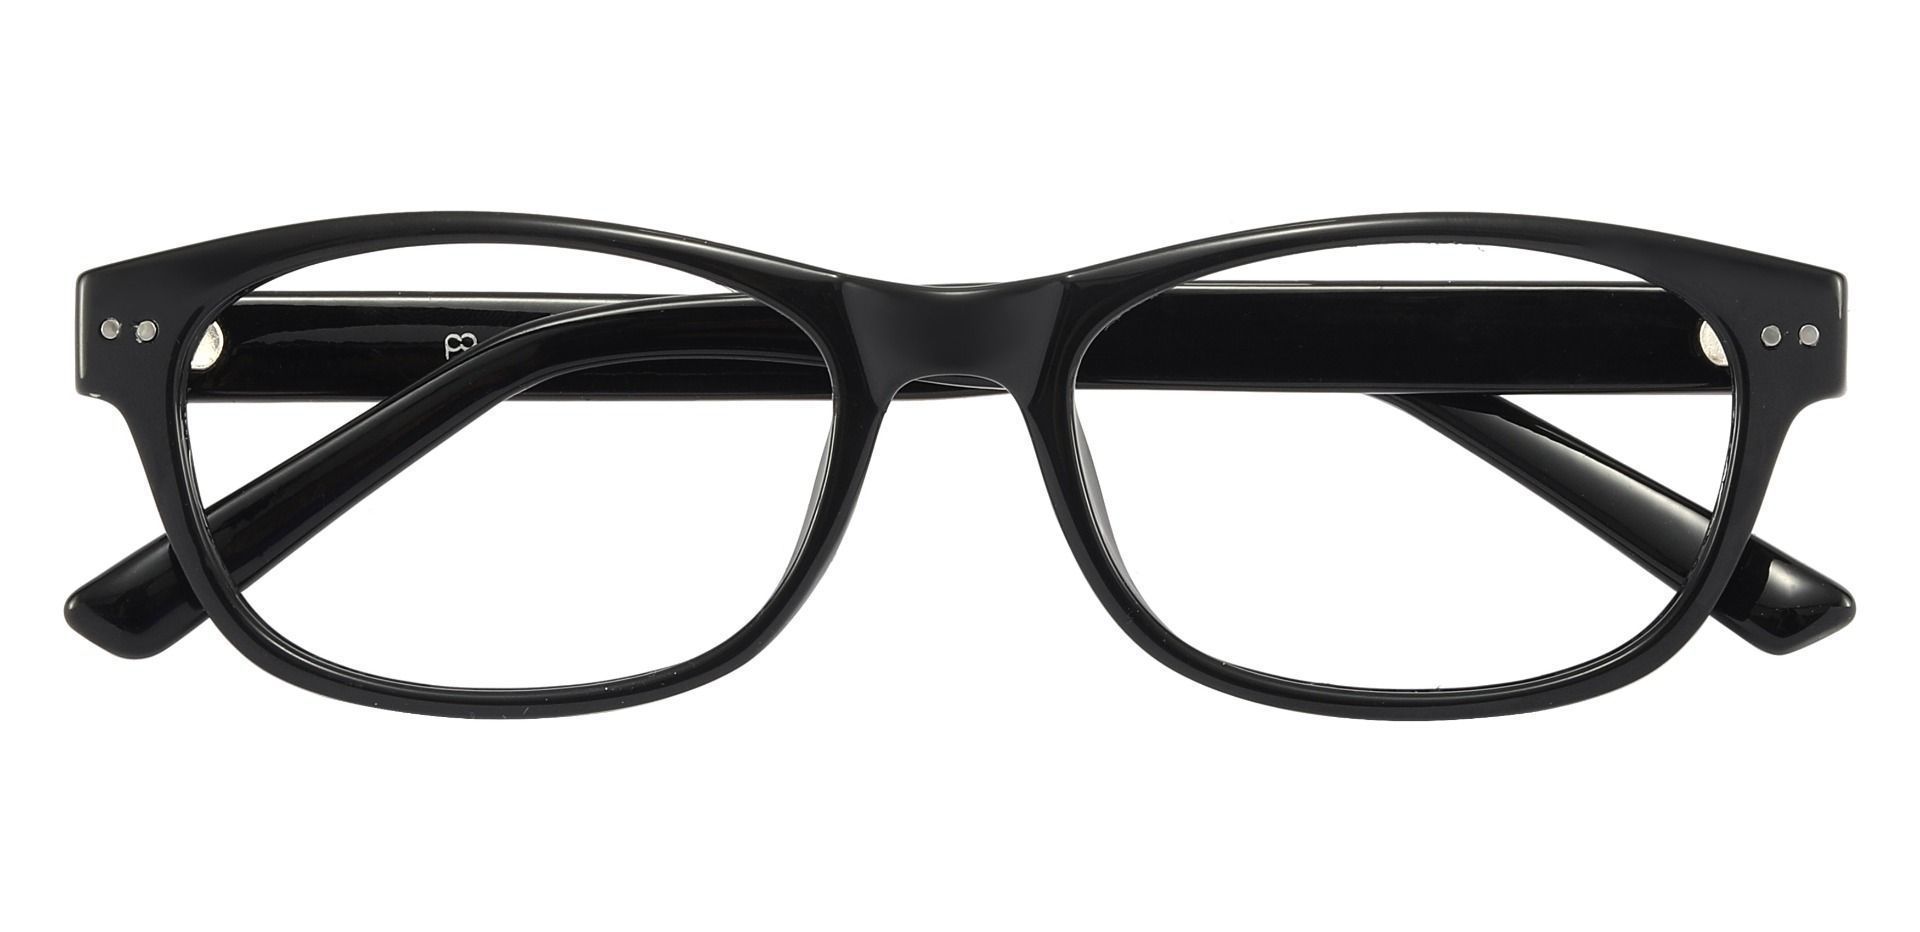 Shaw Oval Eyeglasses Frame - Black